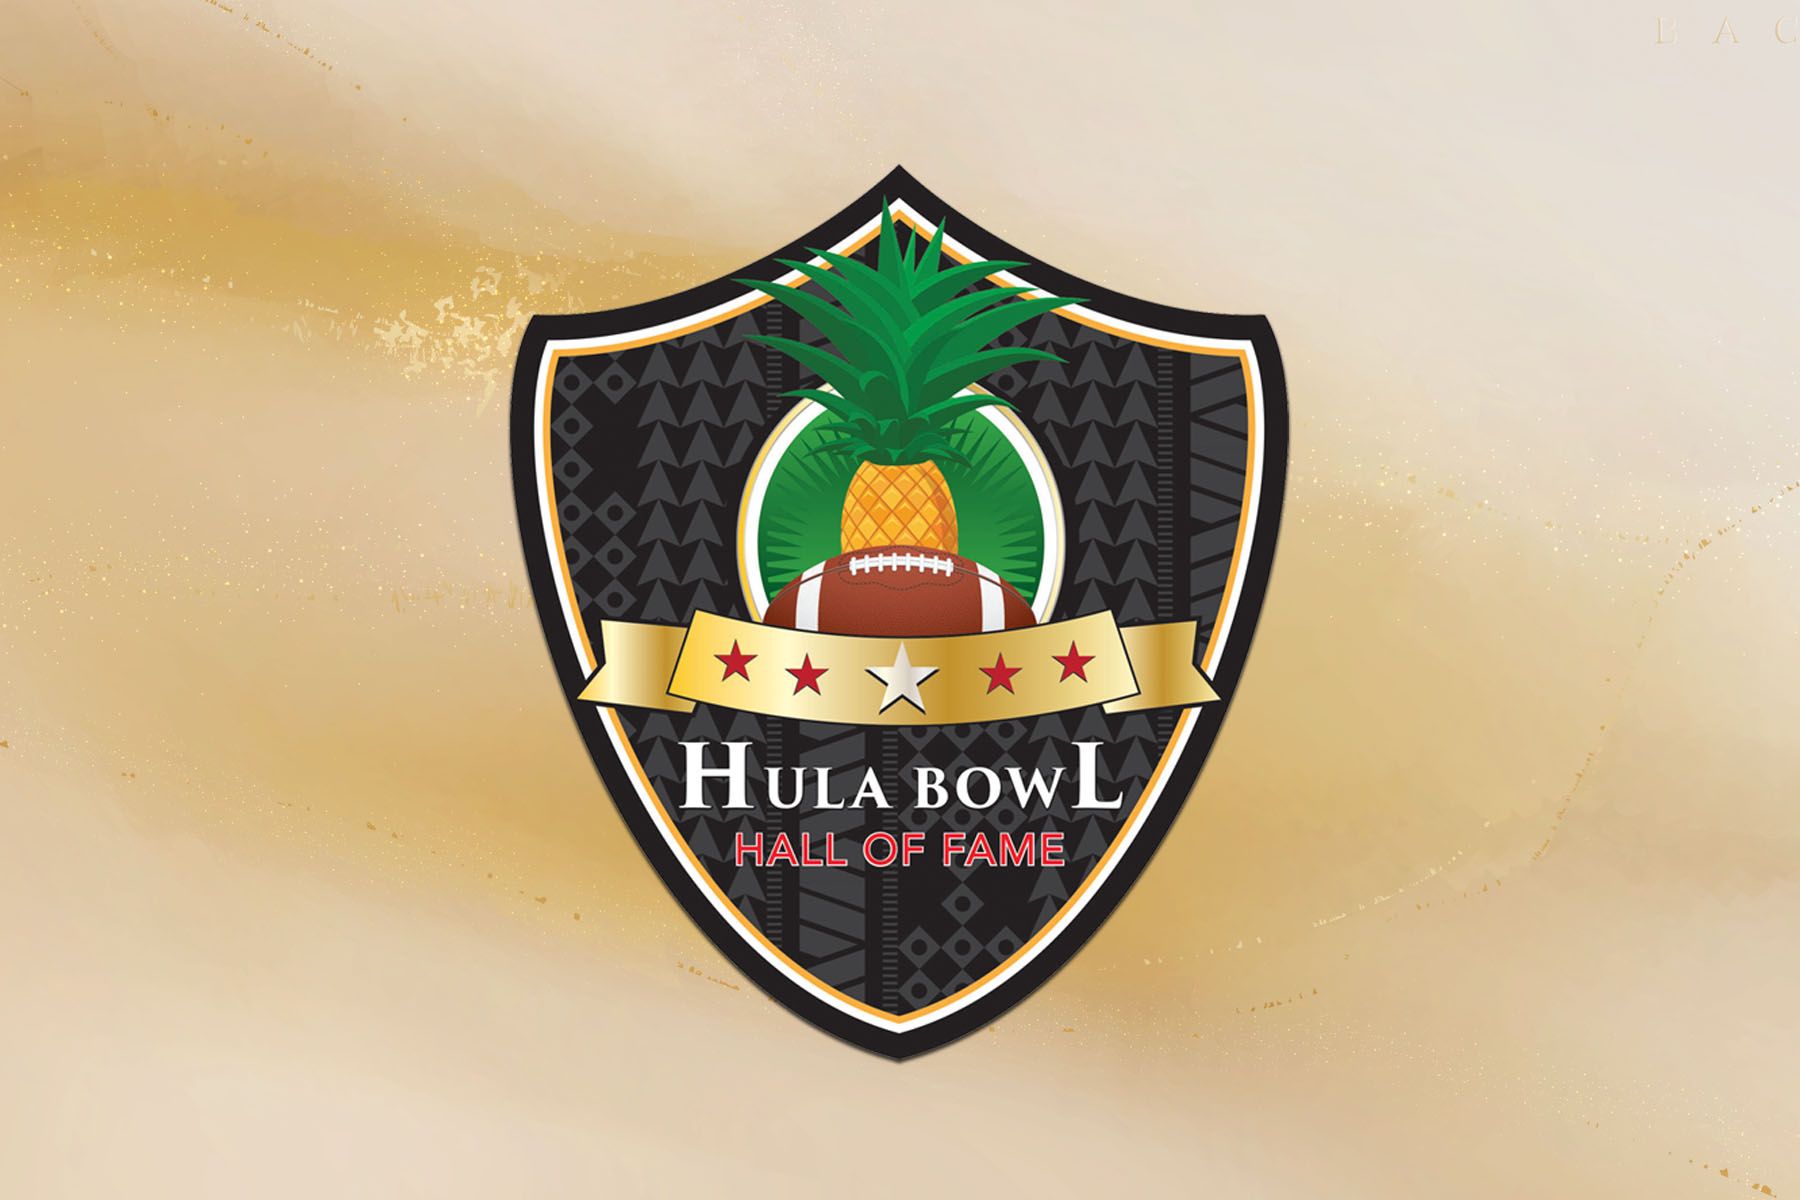 The Game Hula Bowl